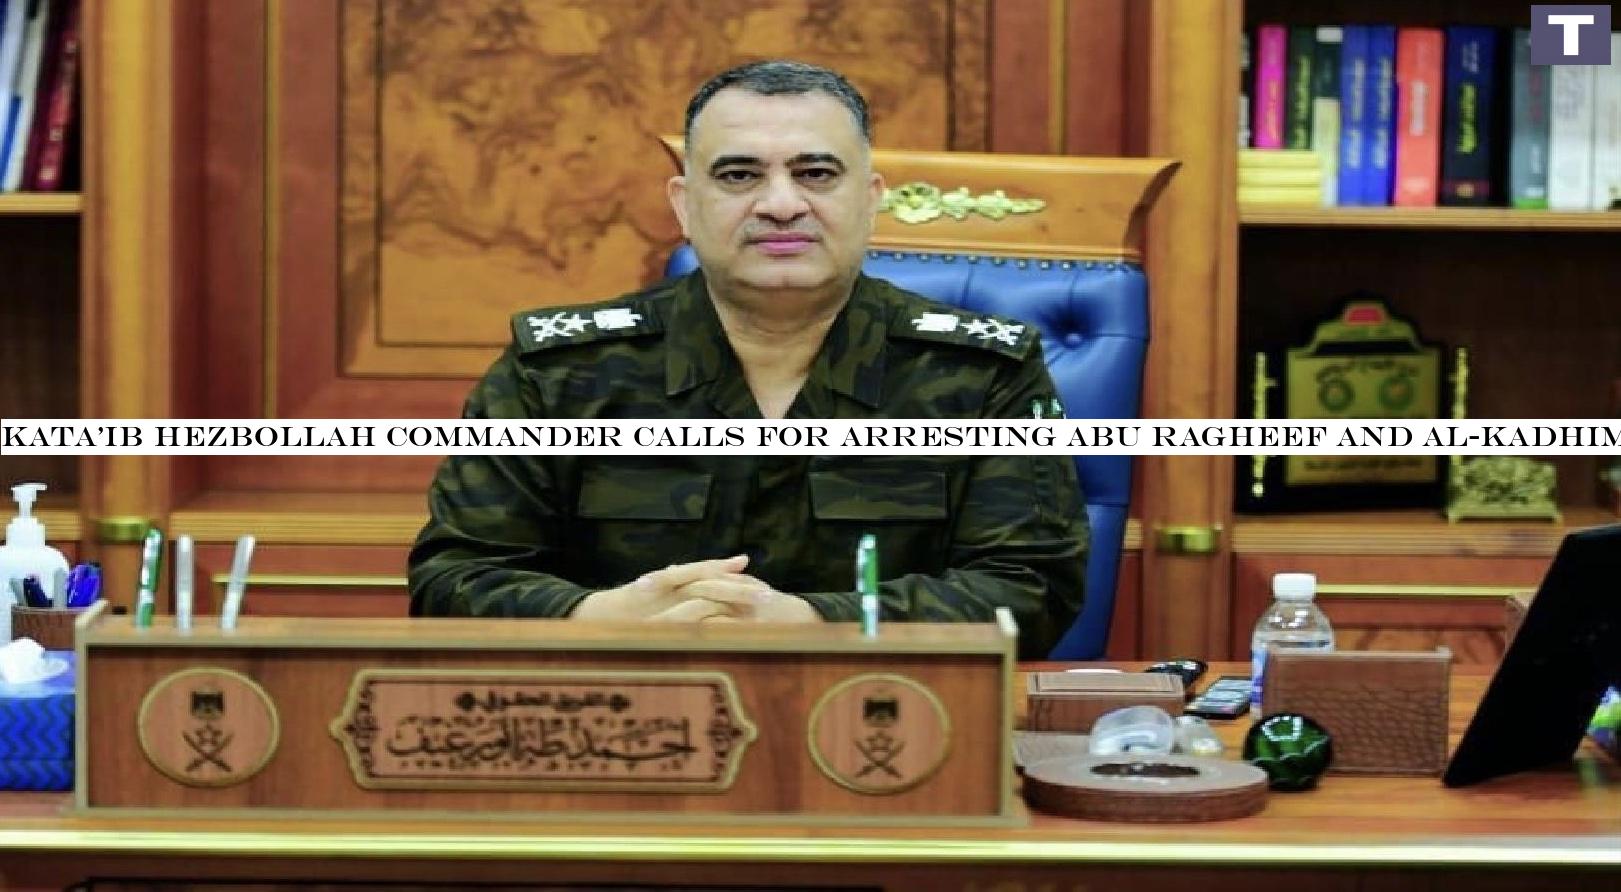 Kata'ib Hezbollah commander calls for arresting Abu Ragheef and al-Kadhimi